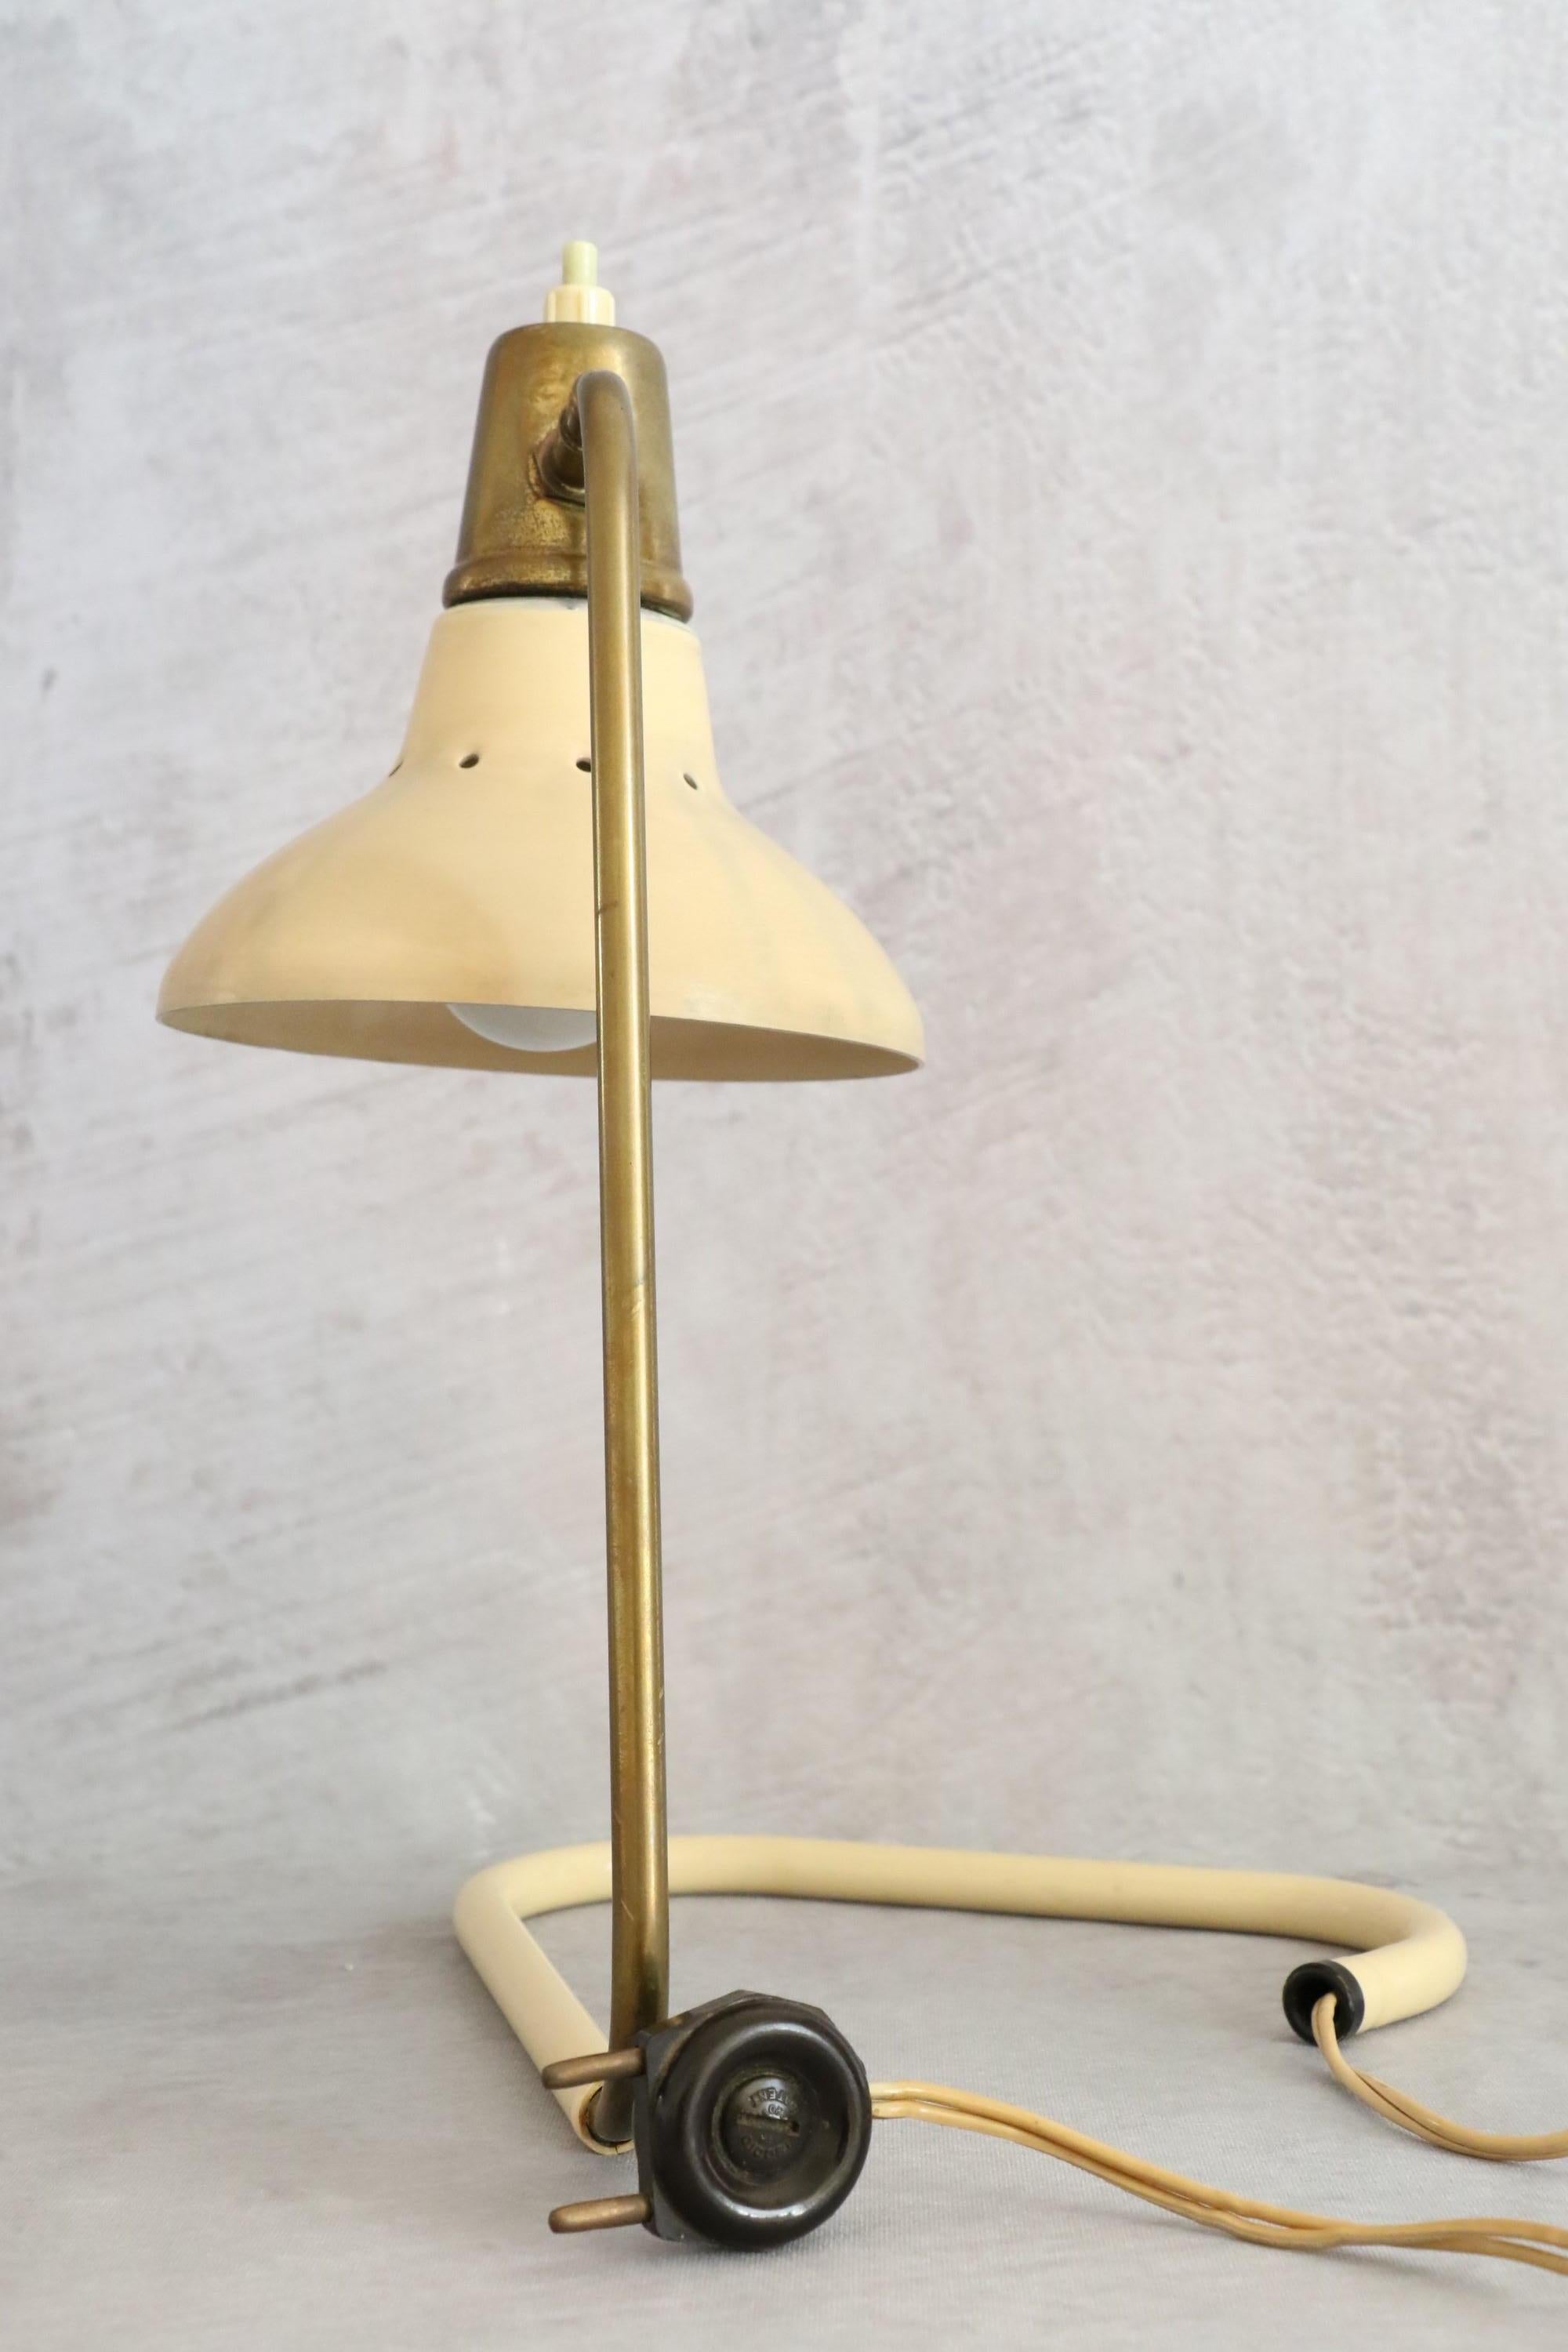 Robert Caillat Mid-Century Modern French Table Lamp 1950 Era Biny Guariche 1